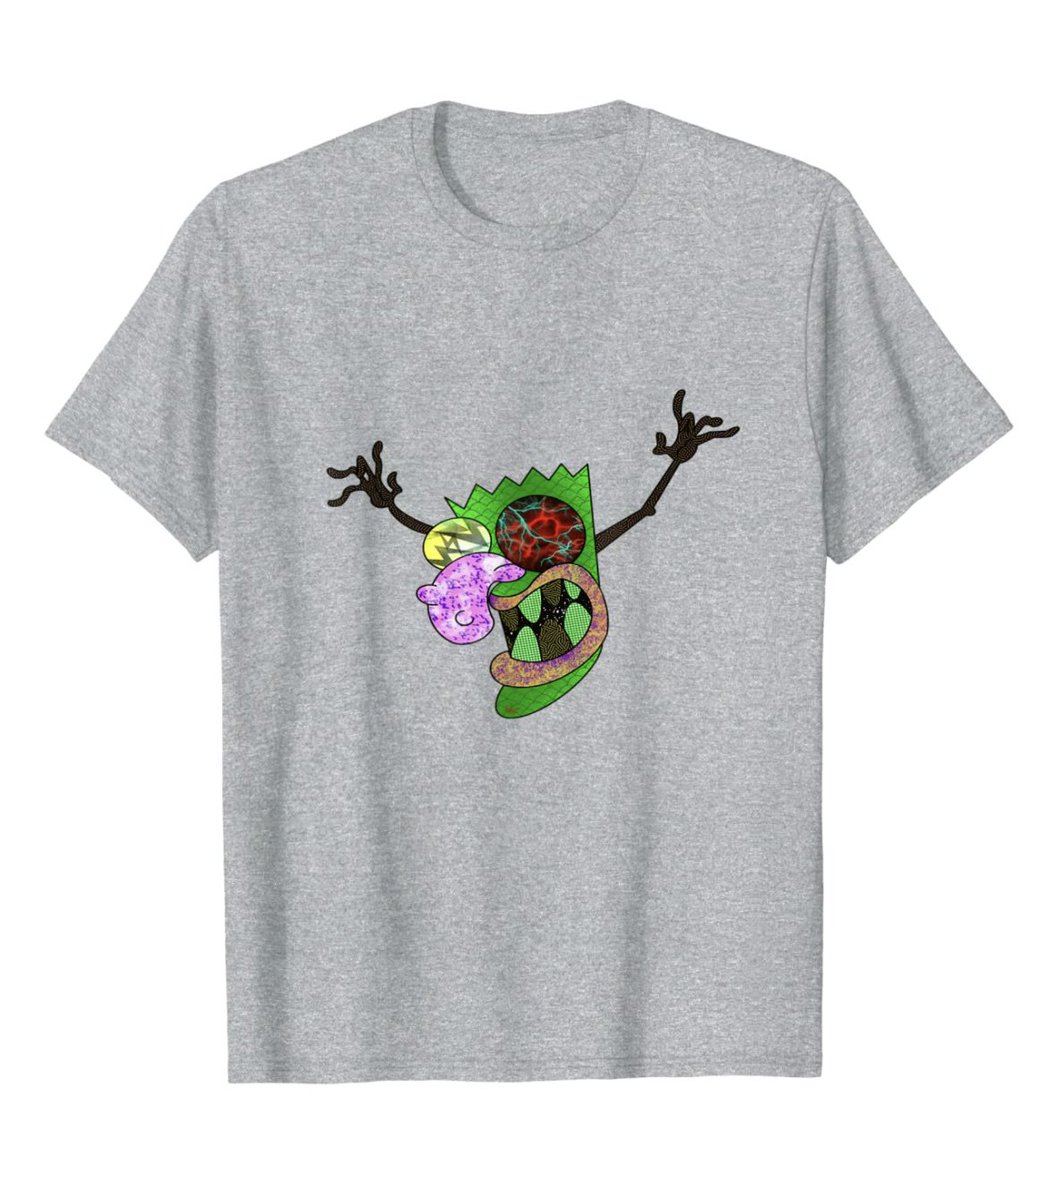 Grab a “Ooga Booga Mask T-Shirt” by SoOo Incredible for $22.99 on #Amazon 🔥 ➡️👉🏽 a.co/d/4t9fbY4 👈🏽⬅️  #freshfit #newshirt #newdesign #fresh #losangeles #forsale #tshirt  #independentartist #oogabooga #popart  #retweet #art #artwork #couragethecowardlydog 🔥